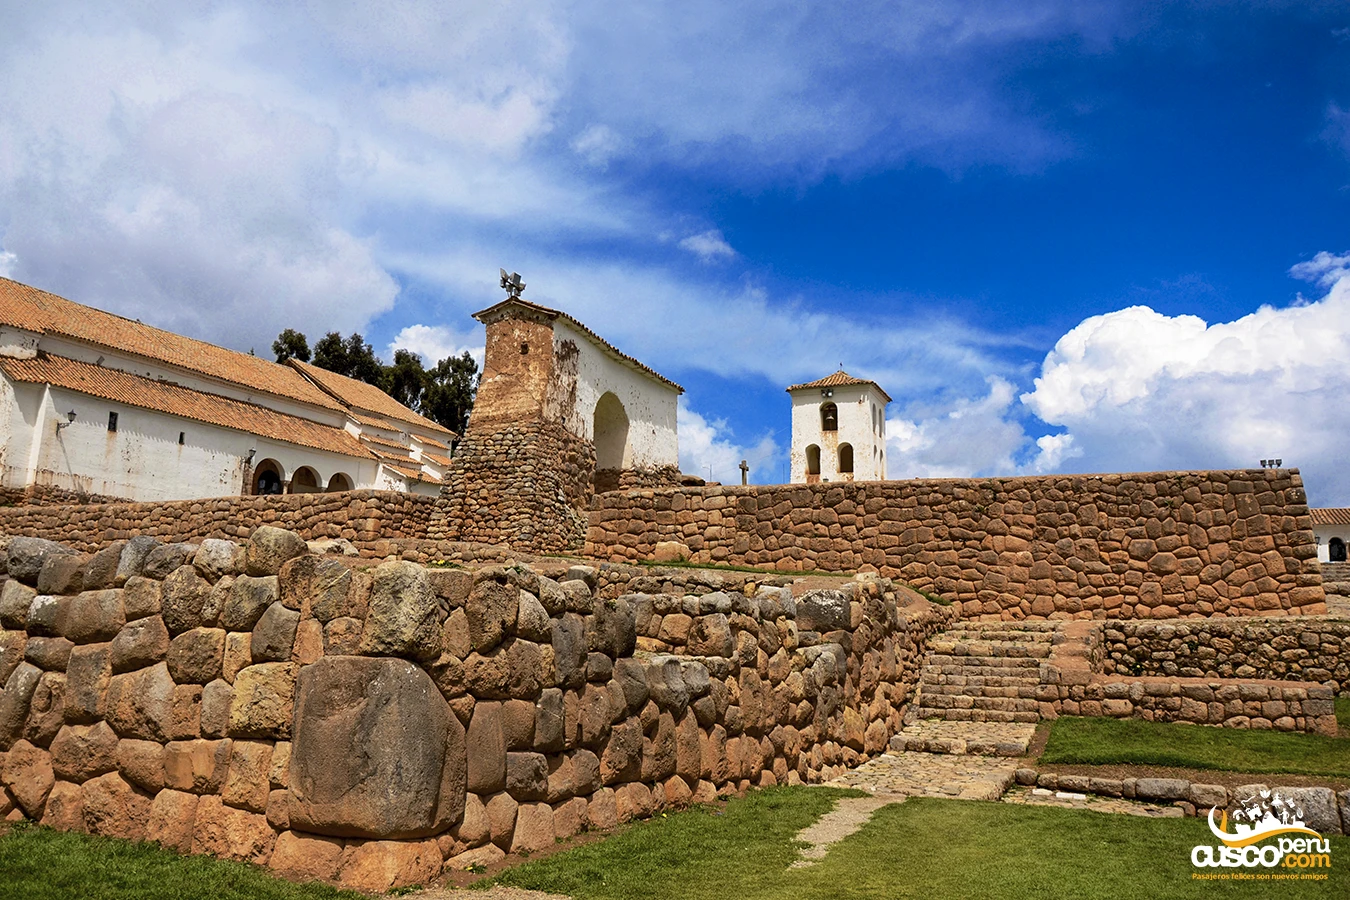 Chinchero Archaeological Center. Source: CuscoPeru.com